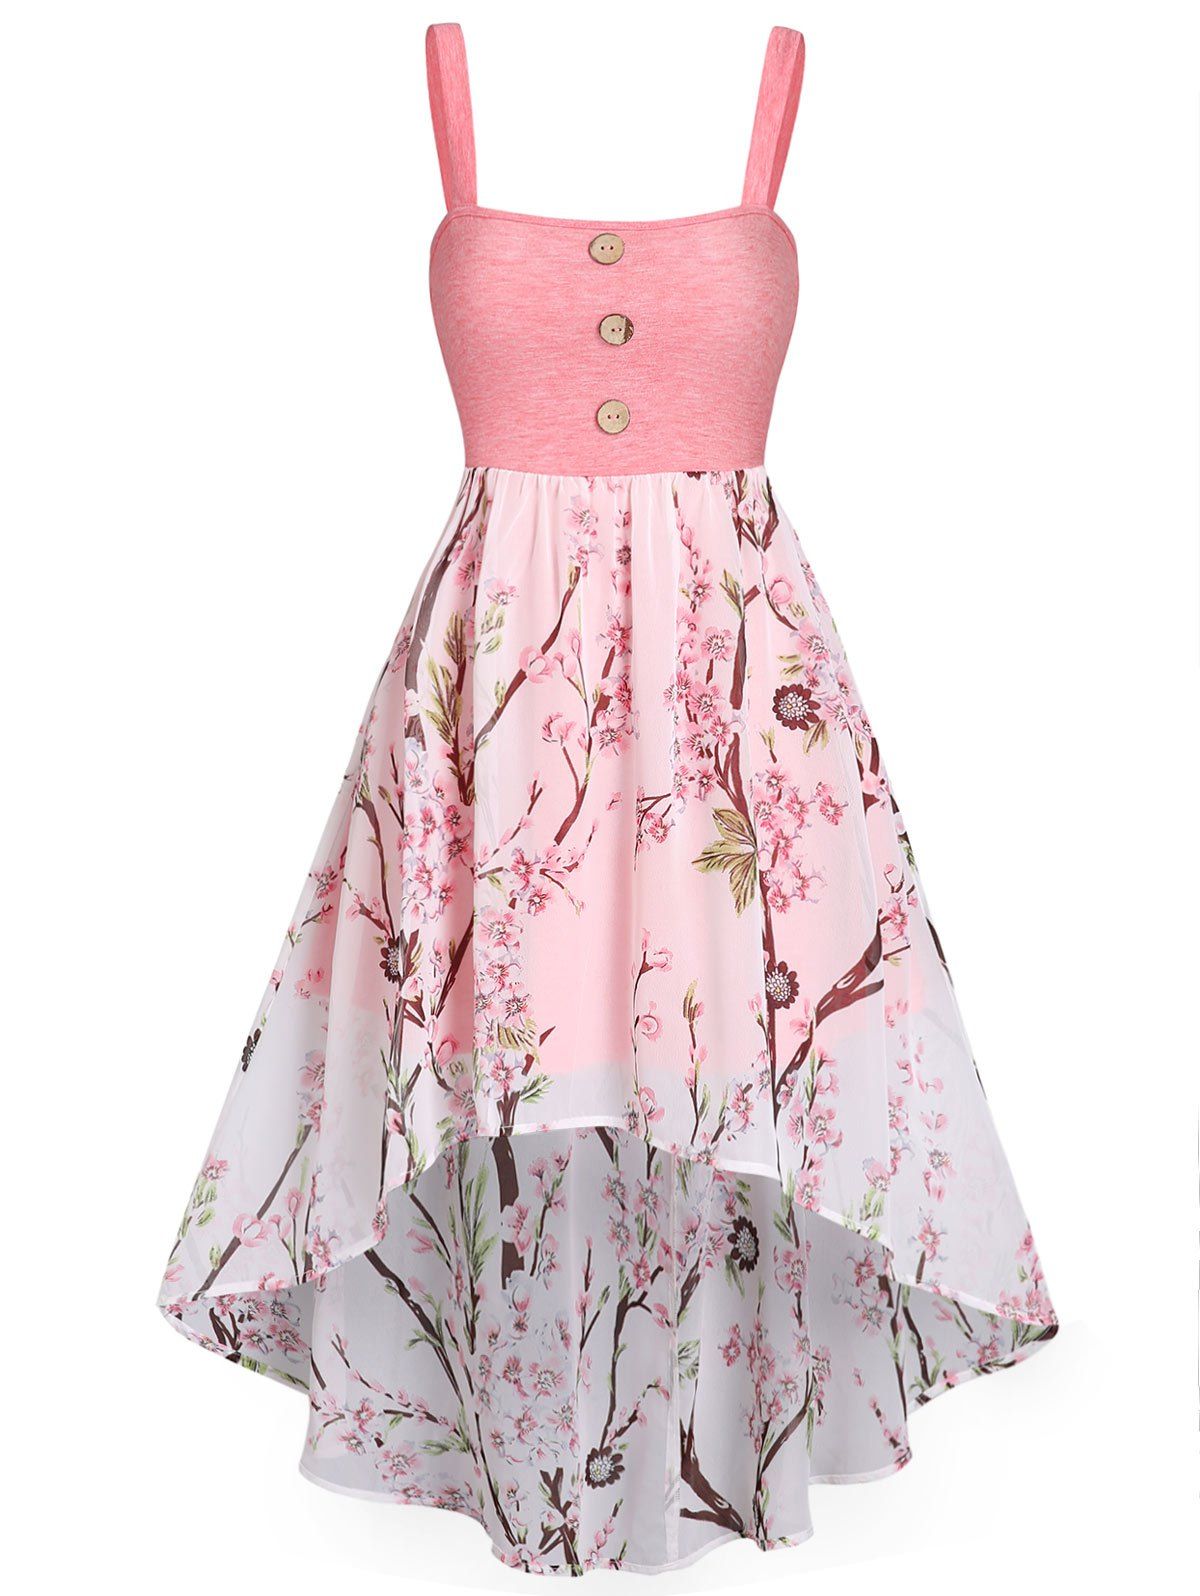 Peach Blossom Print Mesh Overlay High Low Dress Mock Button Space Dye Knot Cut Out Midi Dress - LIGHT PINK XXXL